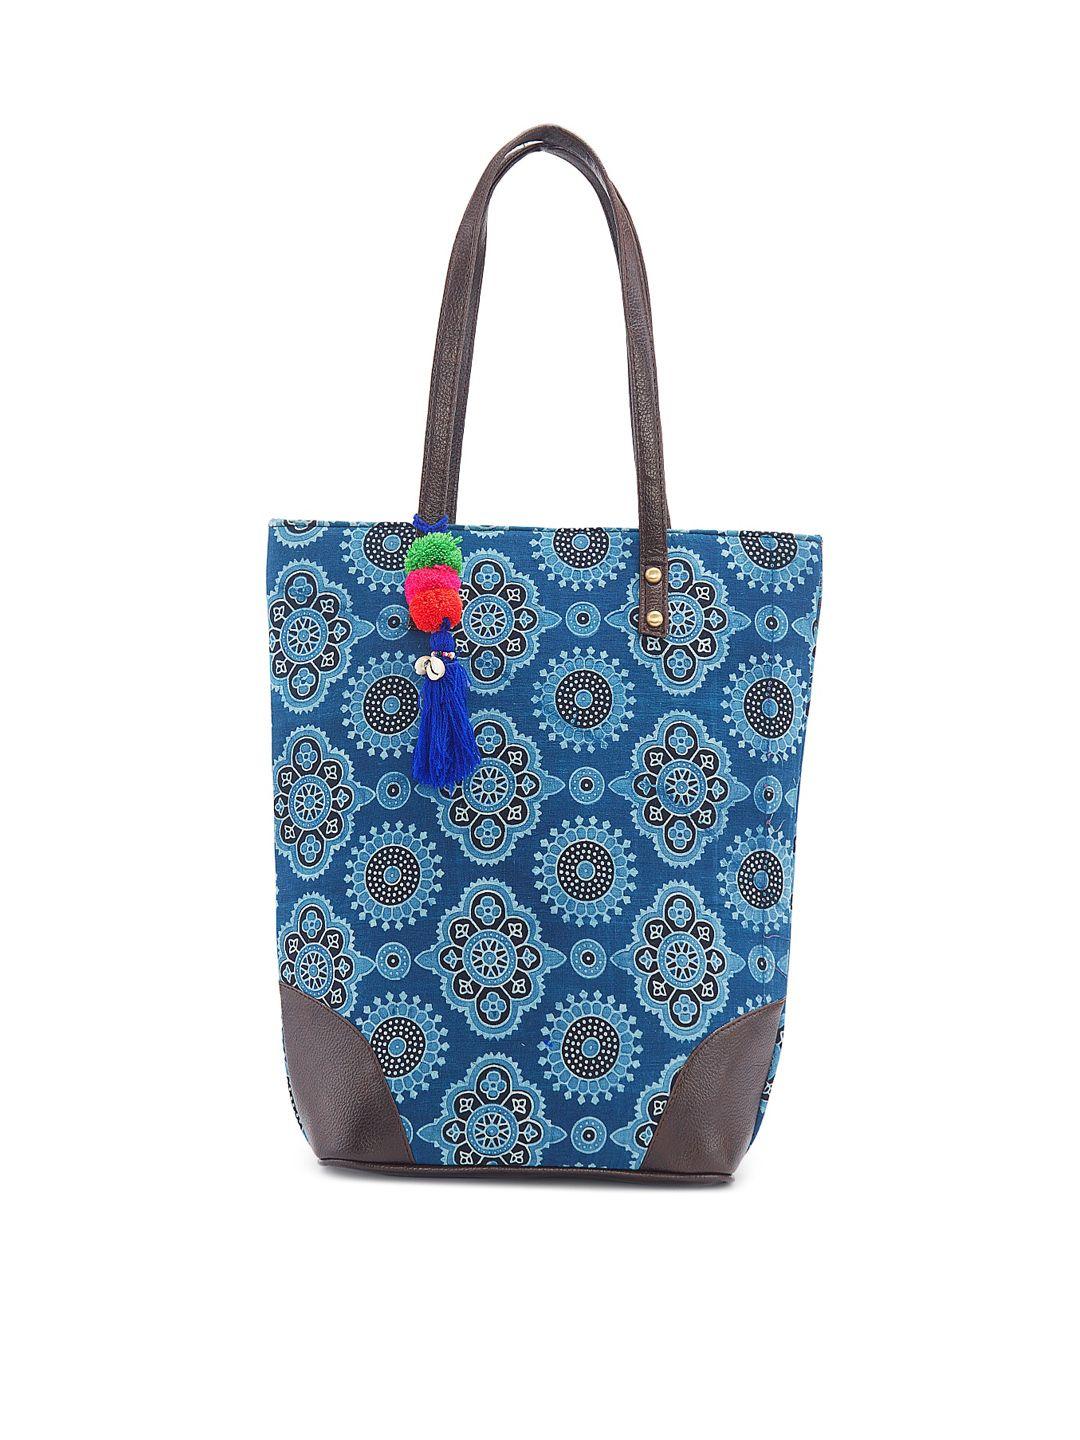 nepri ethnic motifs printed shopper tote bag with tasselled